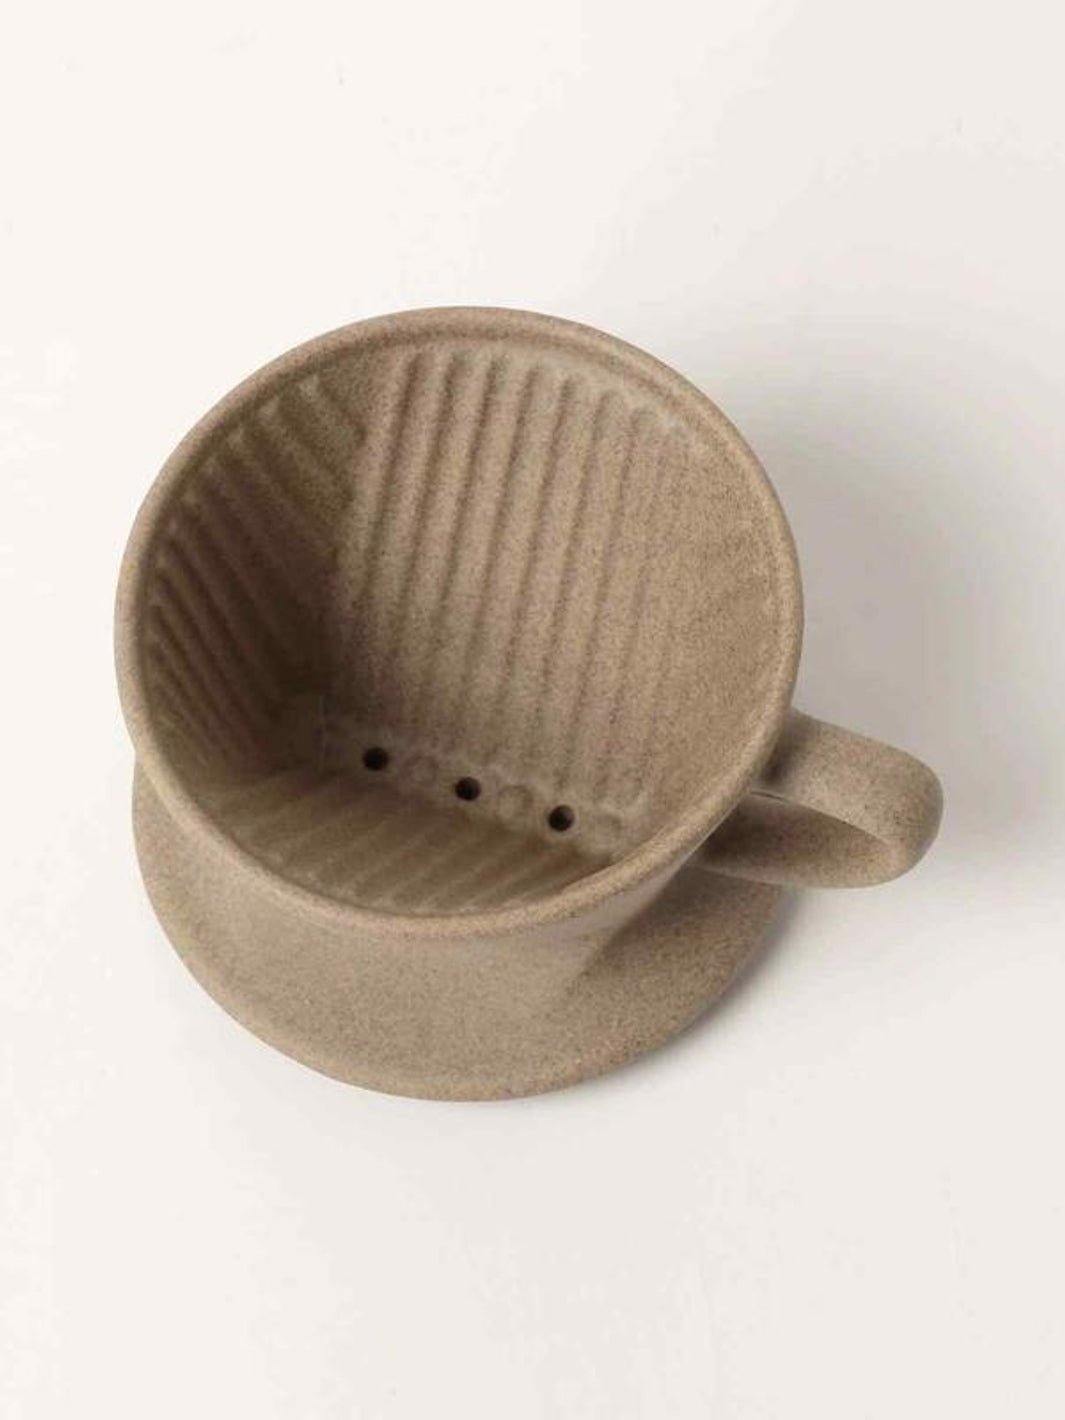 KALITA Sagan (Sandstone) Ceramic Dripper